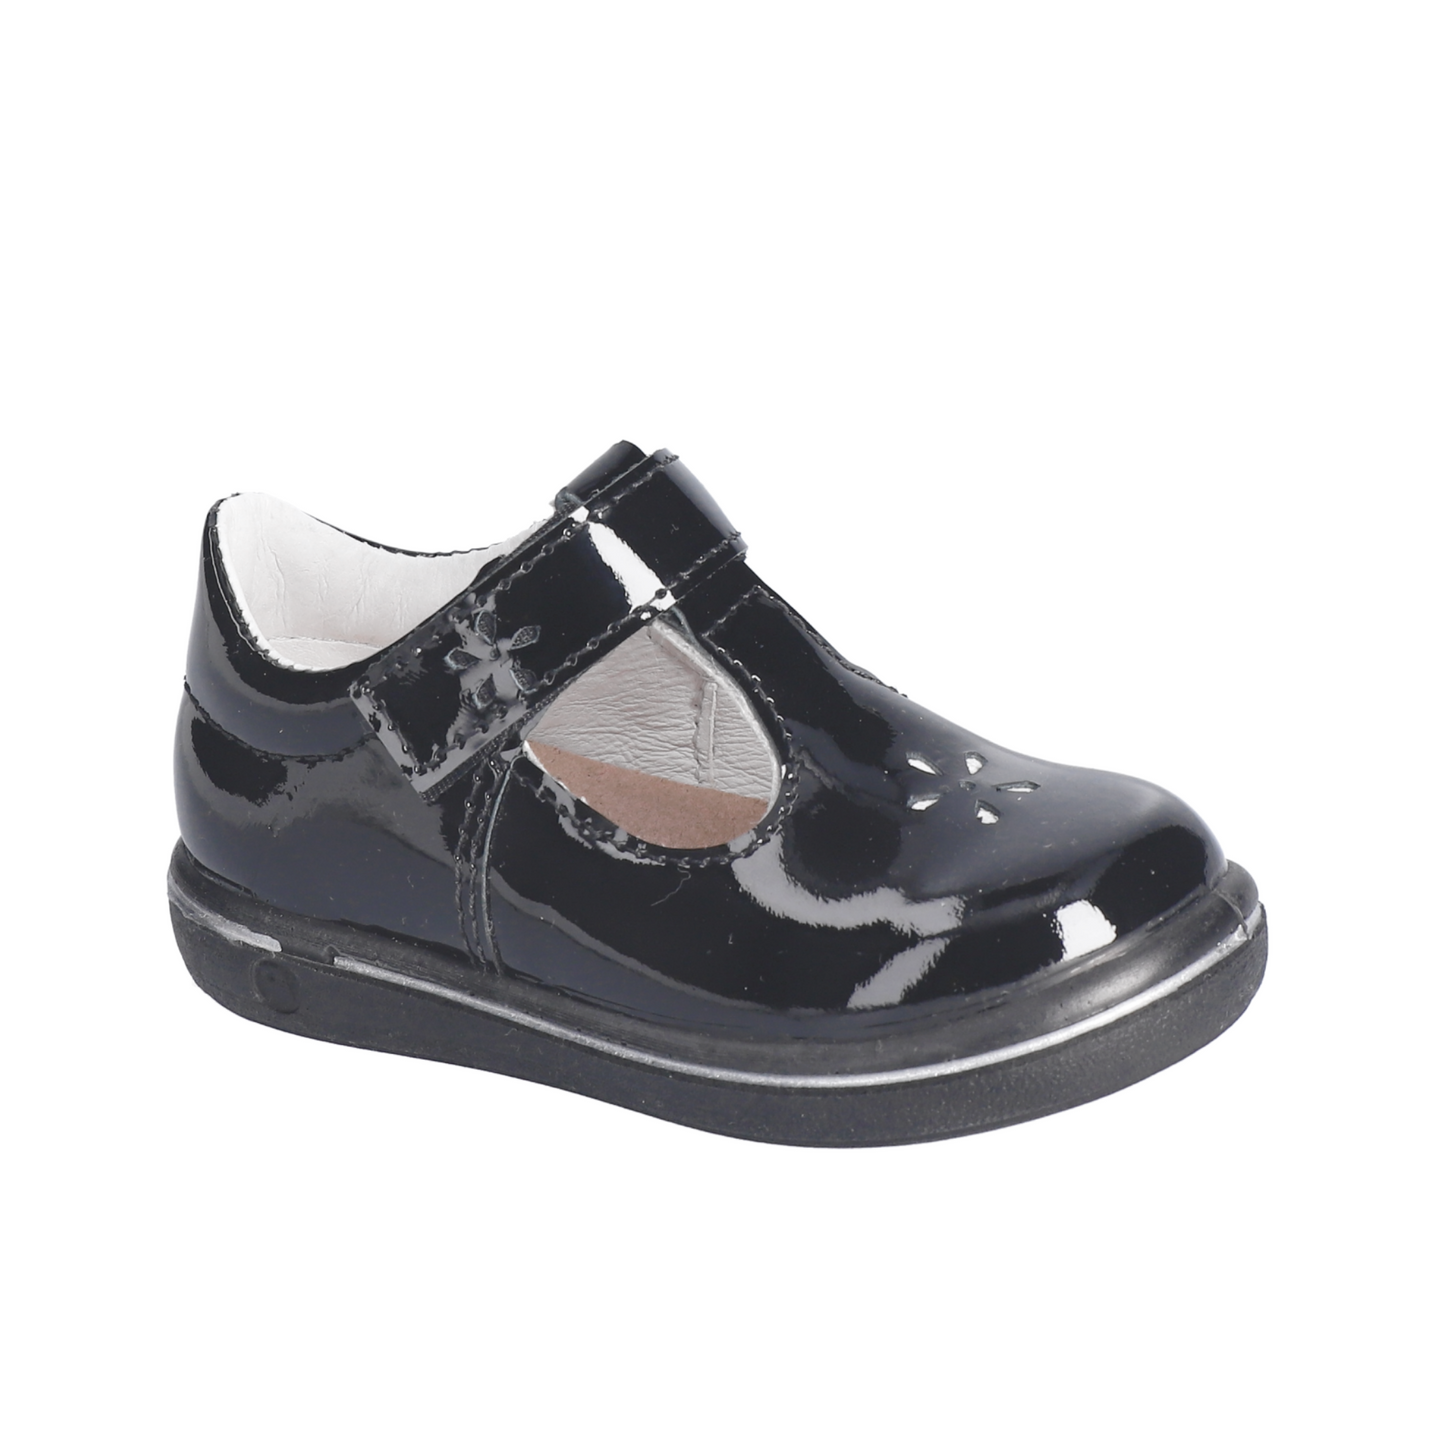 Winona Black Patent Leather T-Bar Girls School Shoe